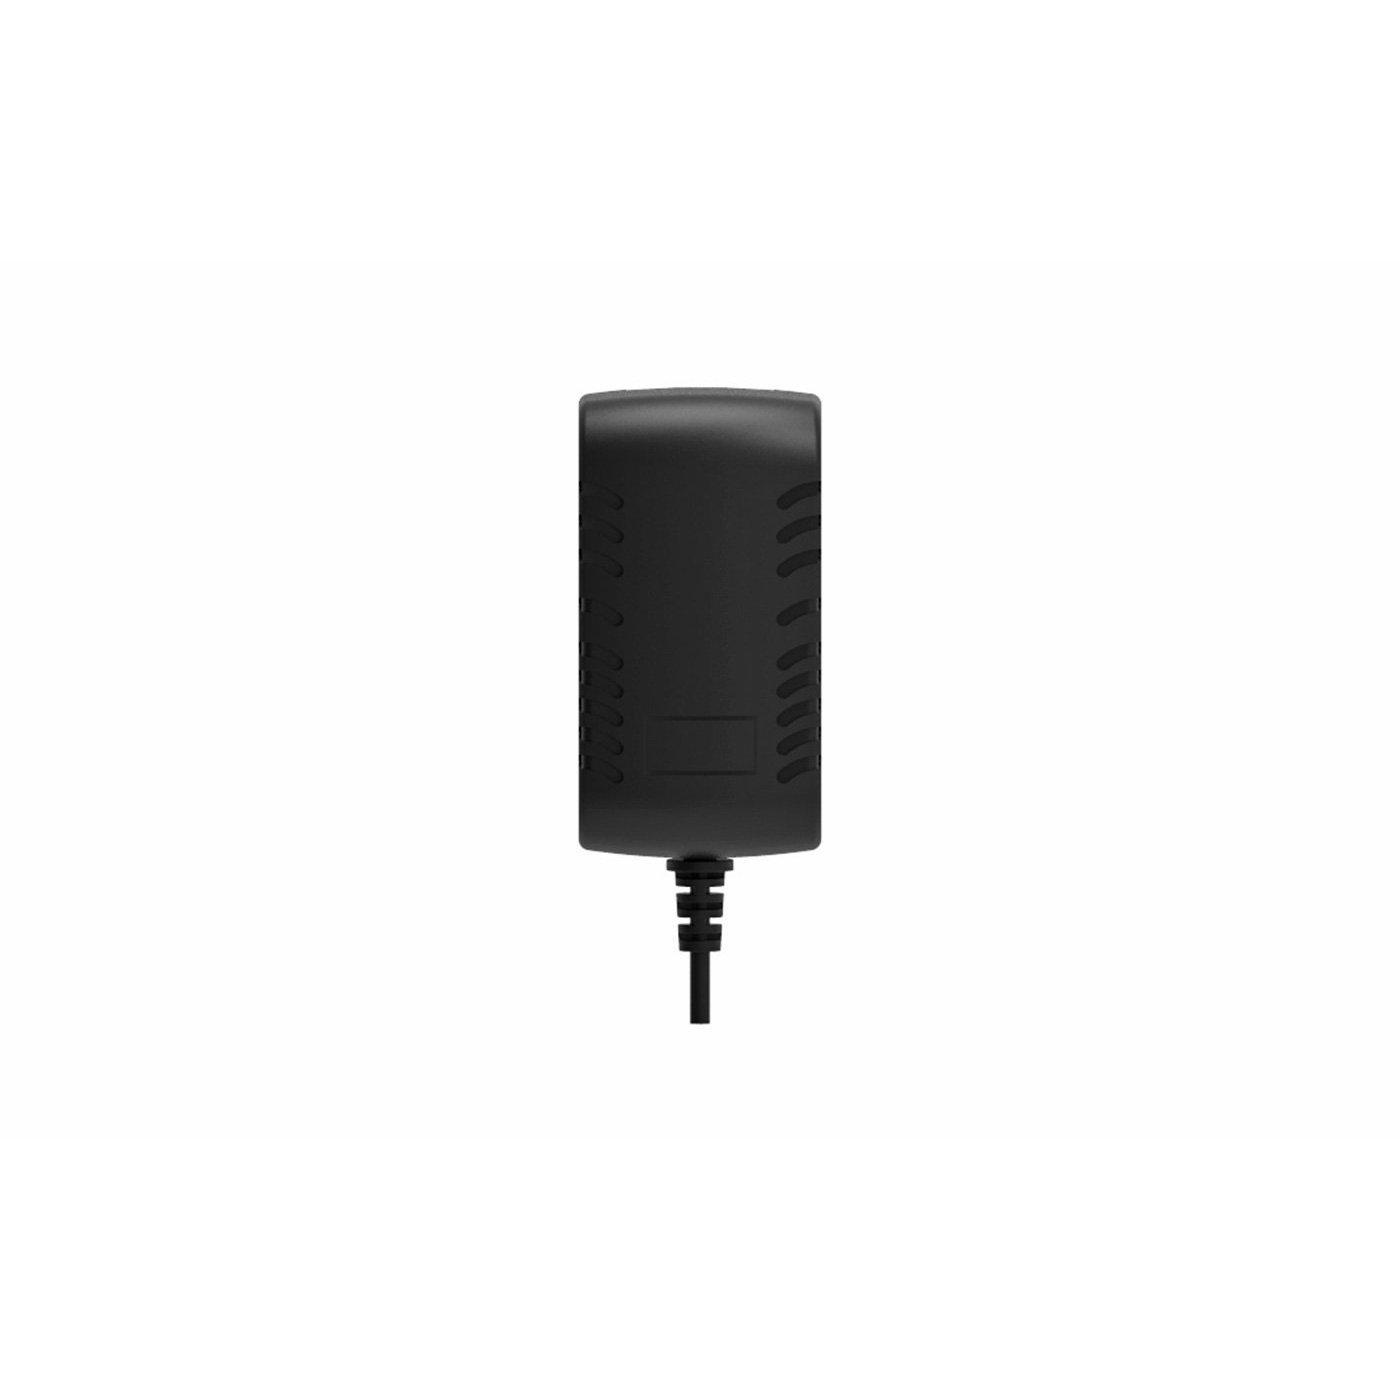 iFi iPower V2 | Audio Power Supply - 5V/2.5A